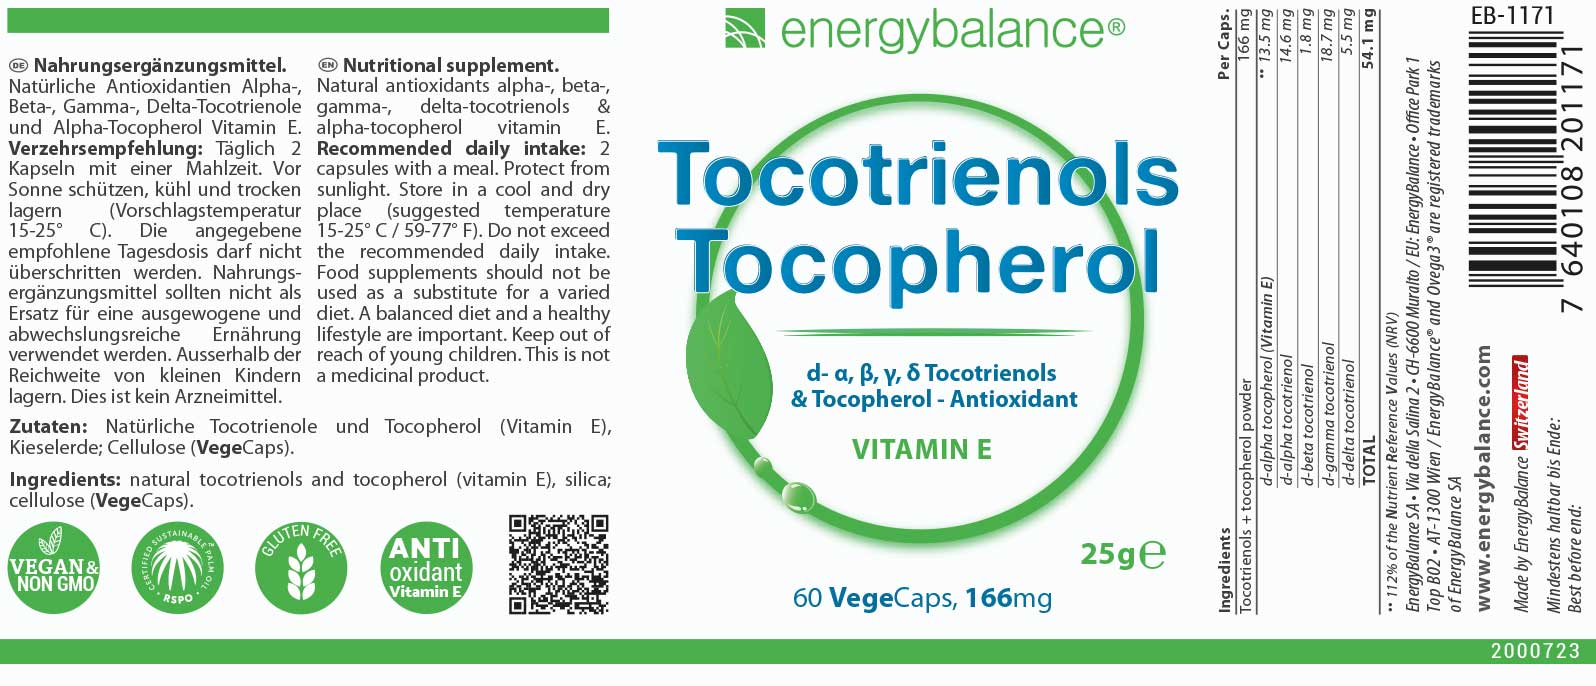 Tocotrienols Tocopherol Etikett von Energybalance